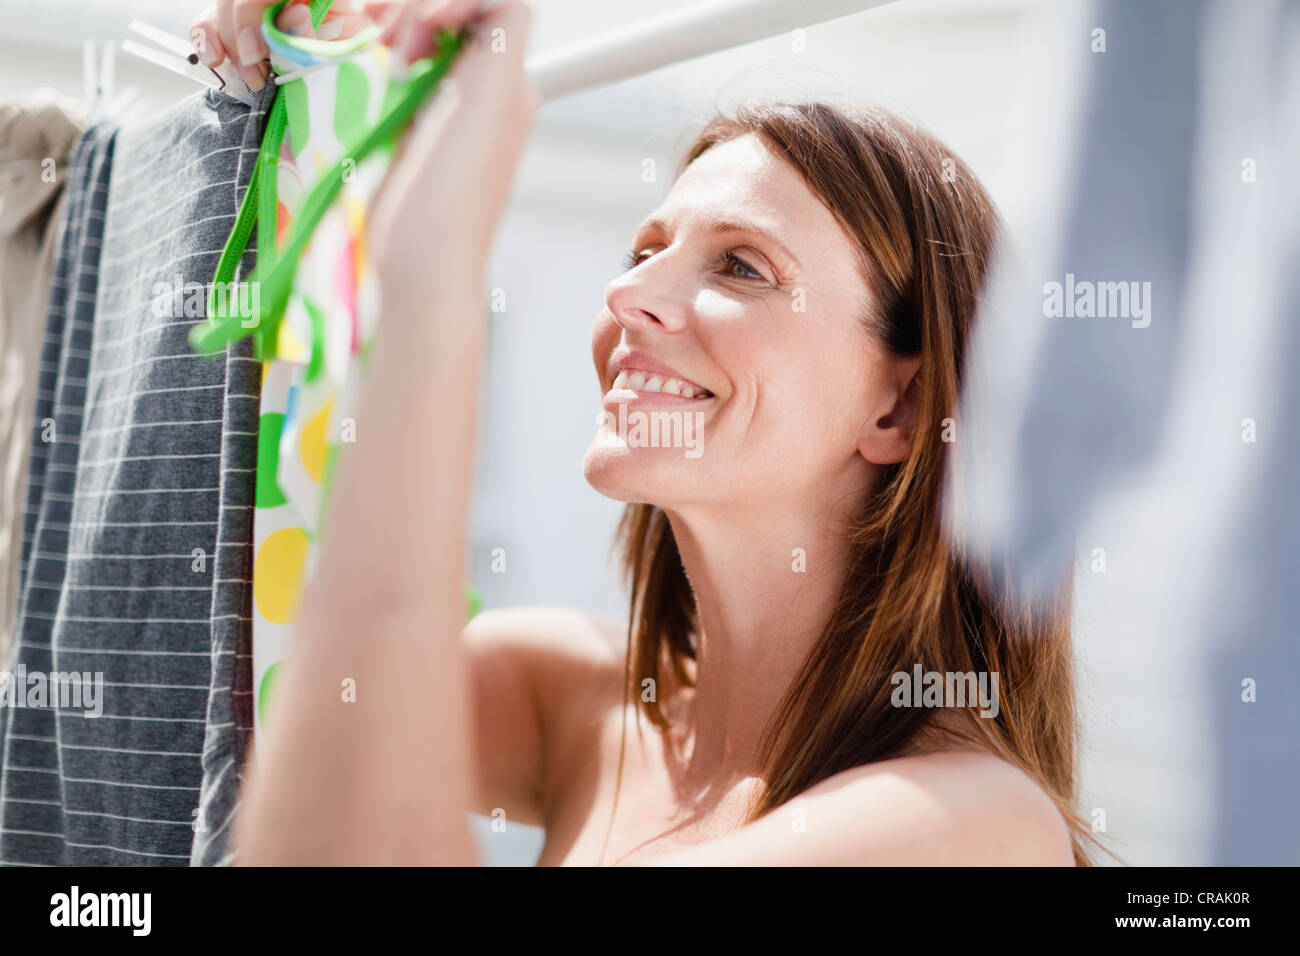 Smiling woman hanging laundry Stock Photo